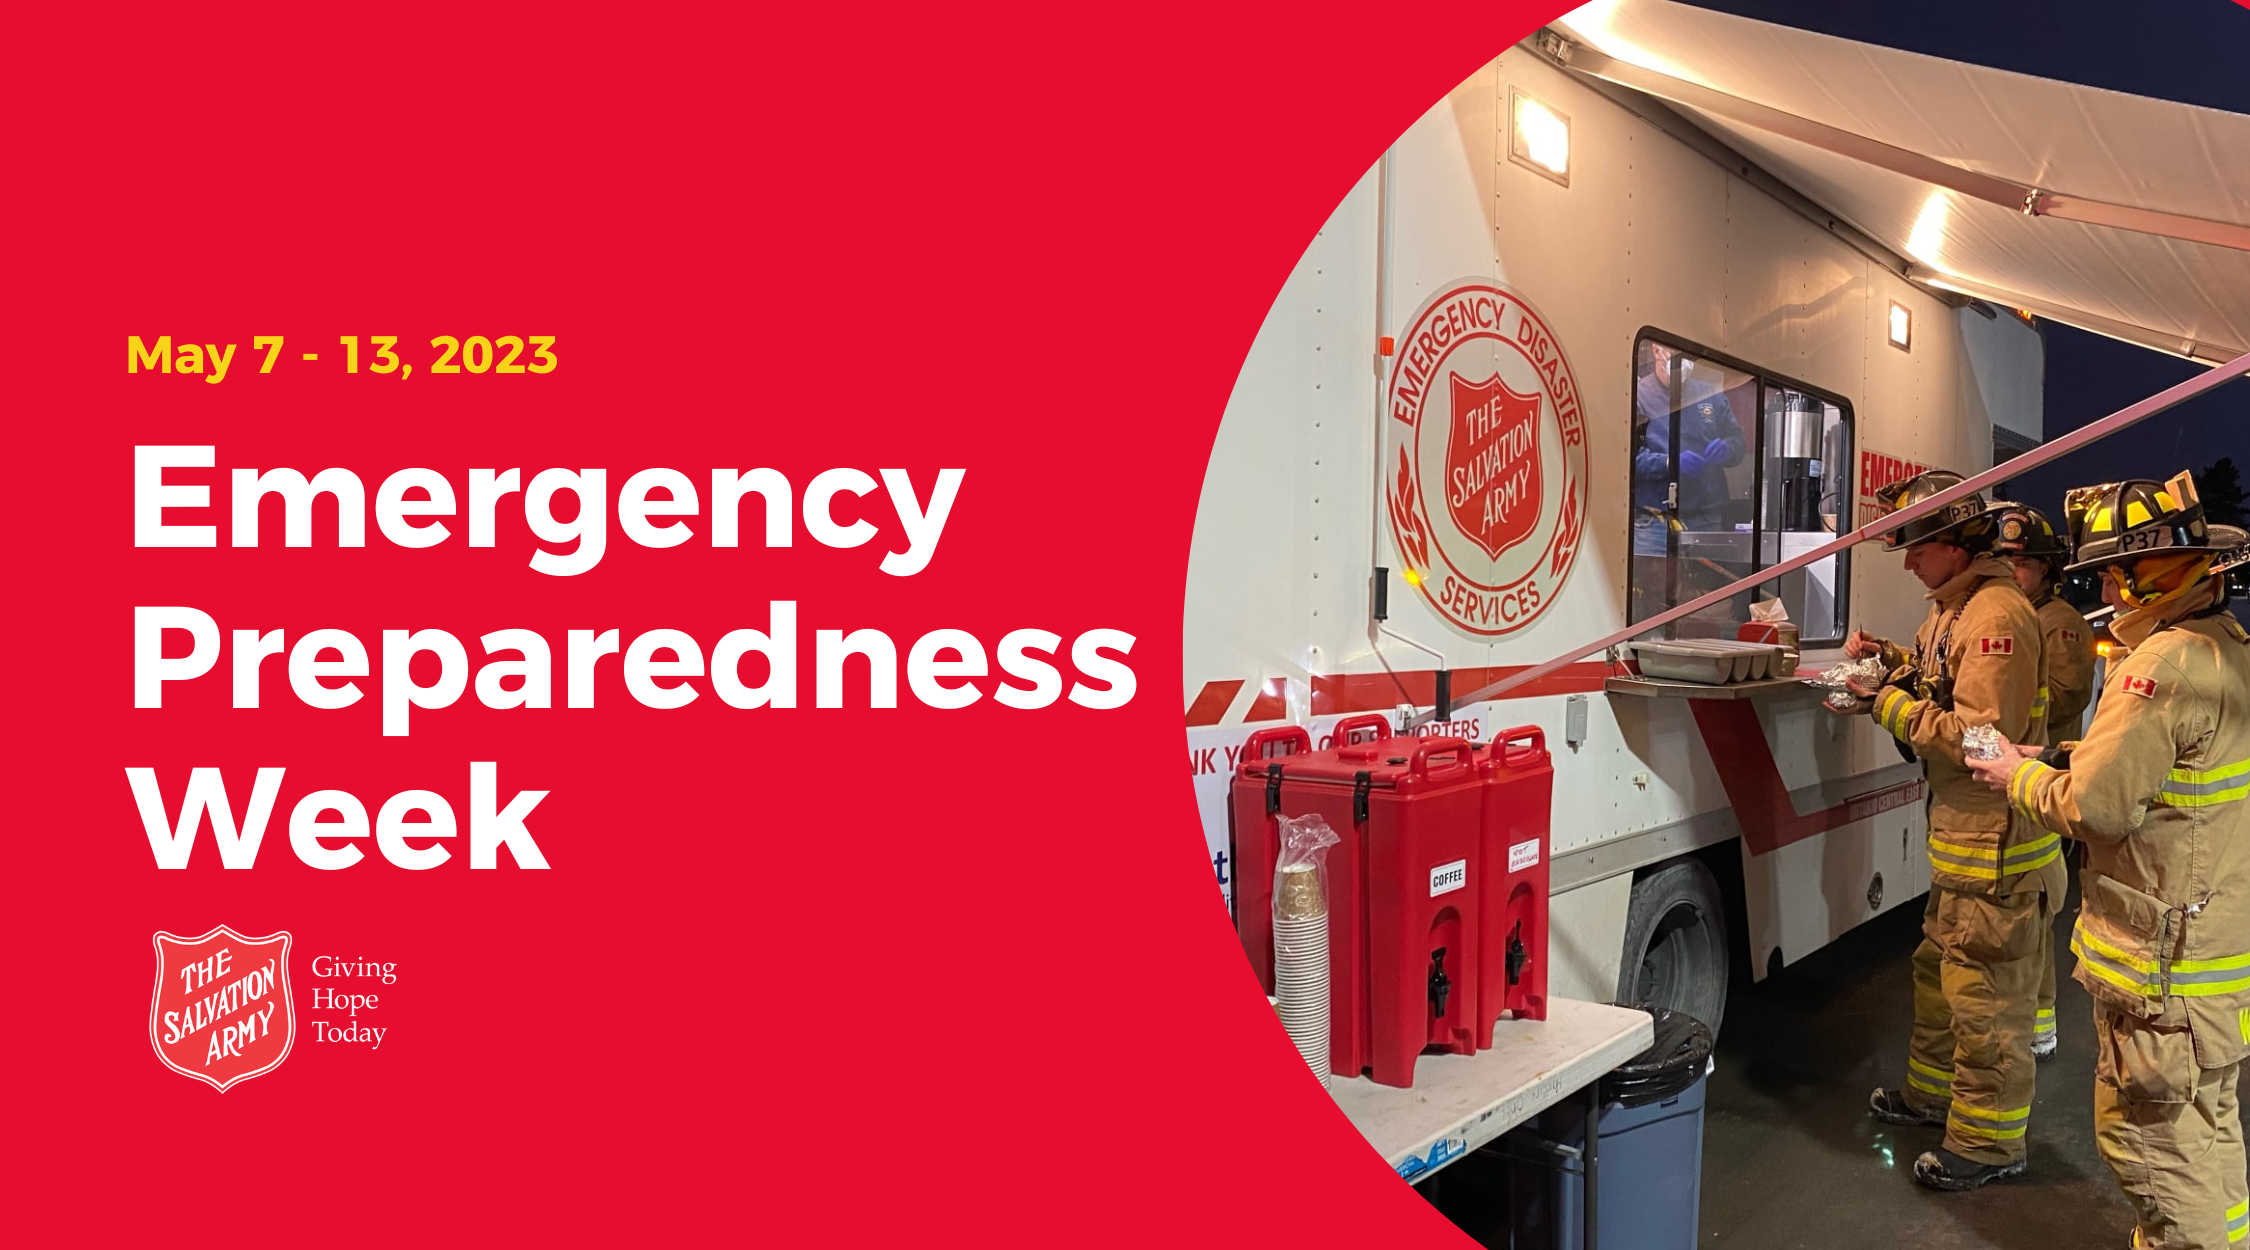 Be Ready for Disasters in Ontario During Emergency Preparedness Week